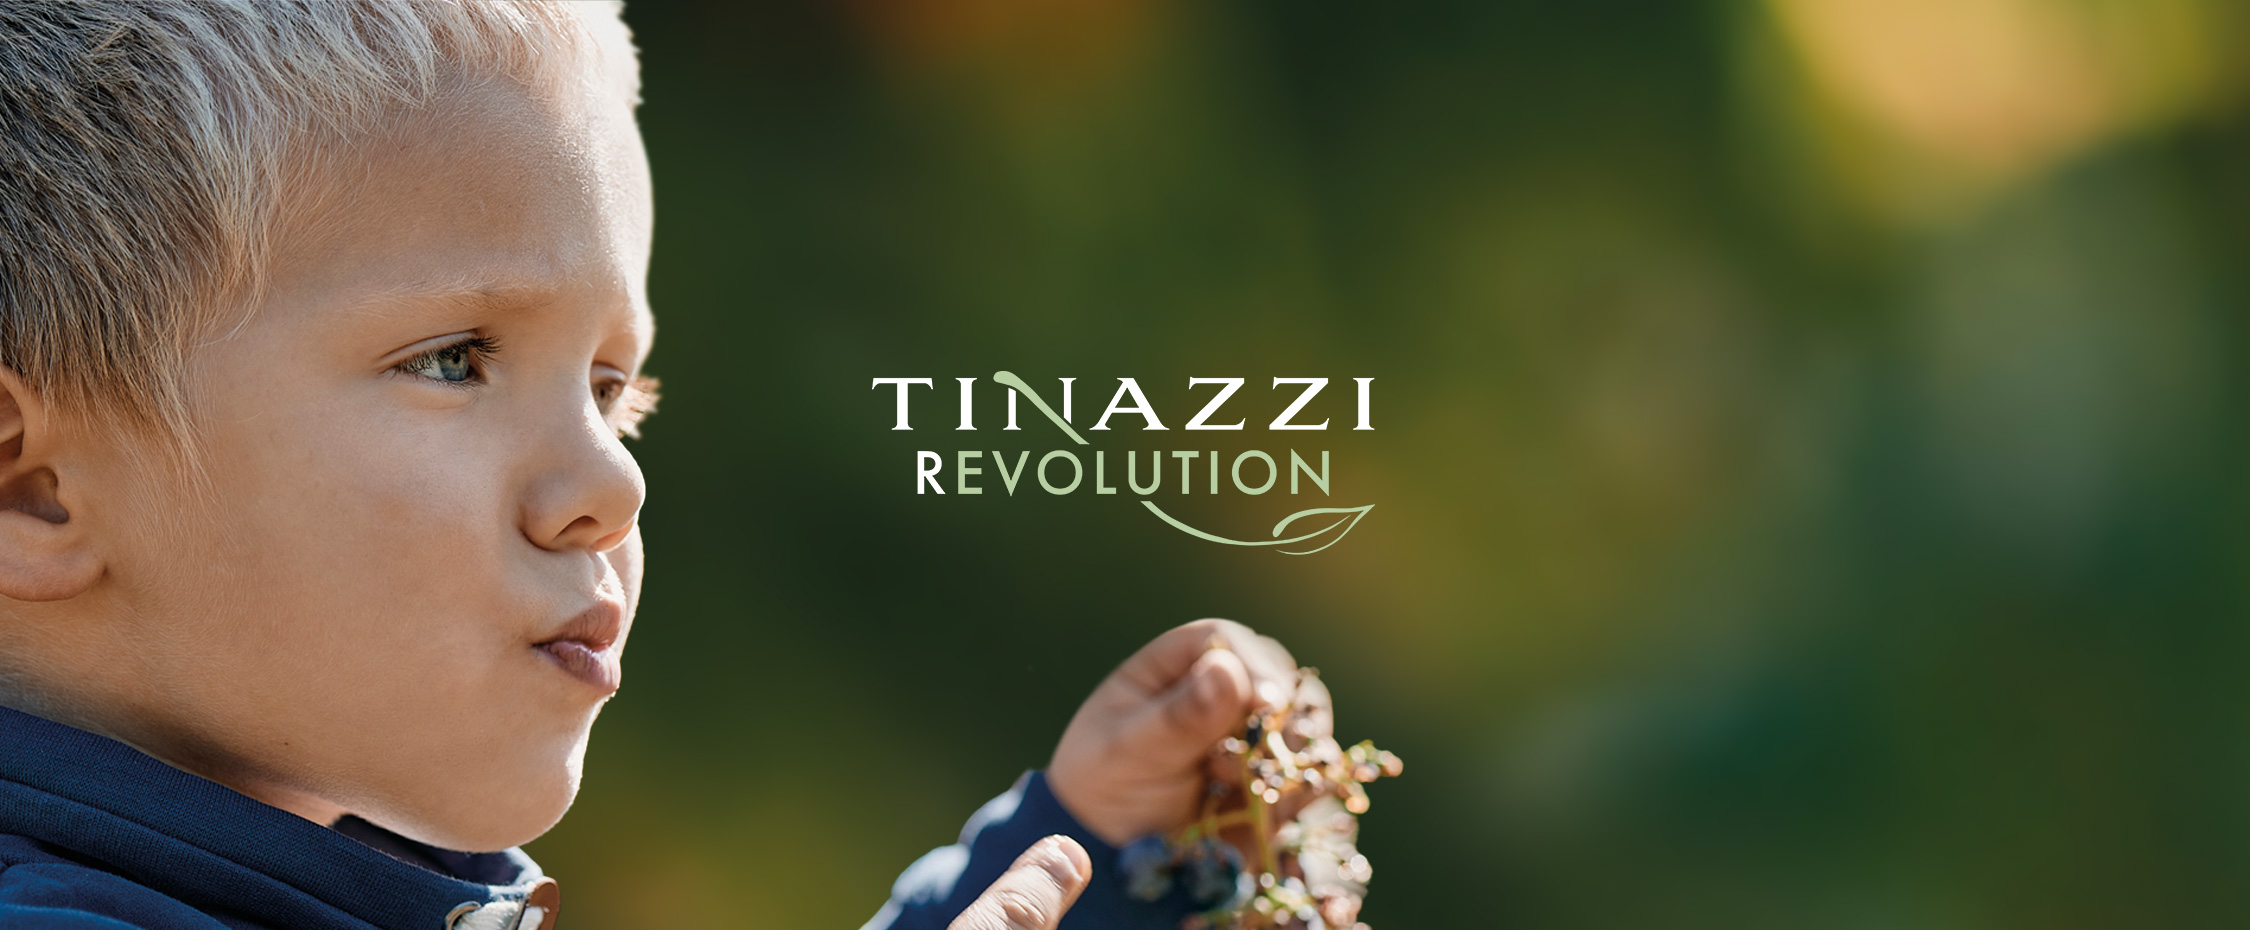 tinazzi-revoluition-banner-home